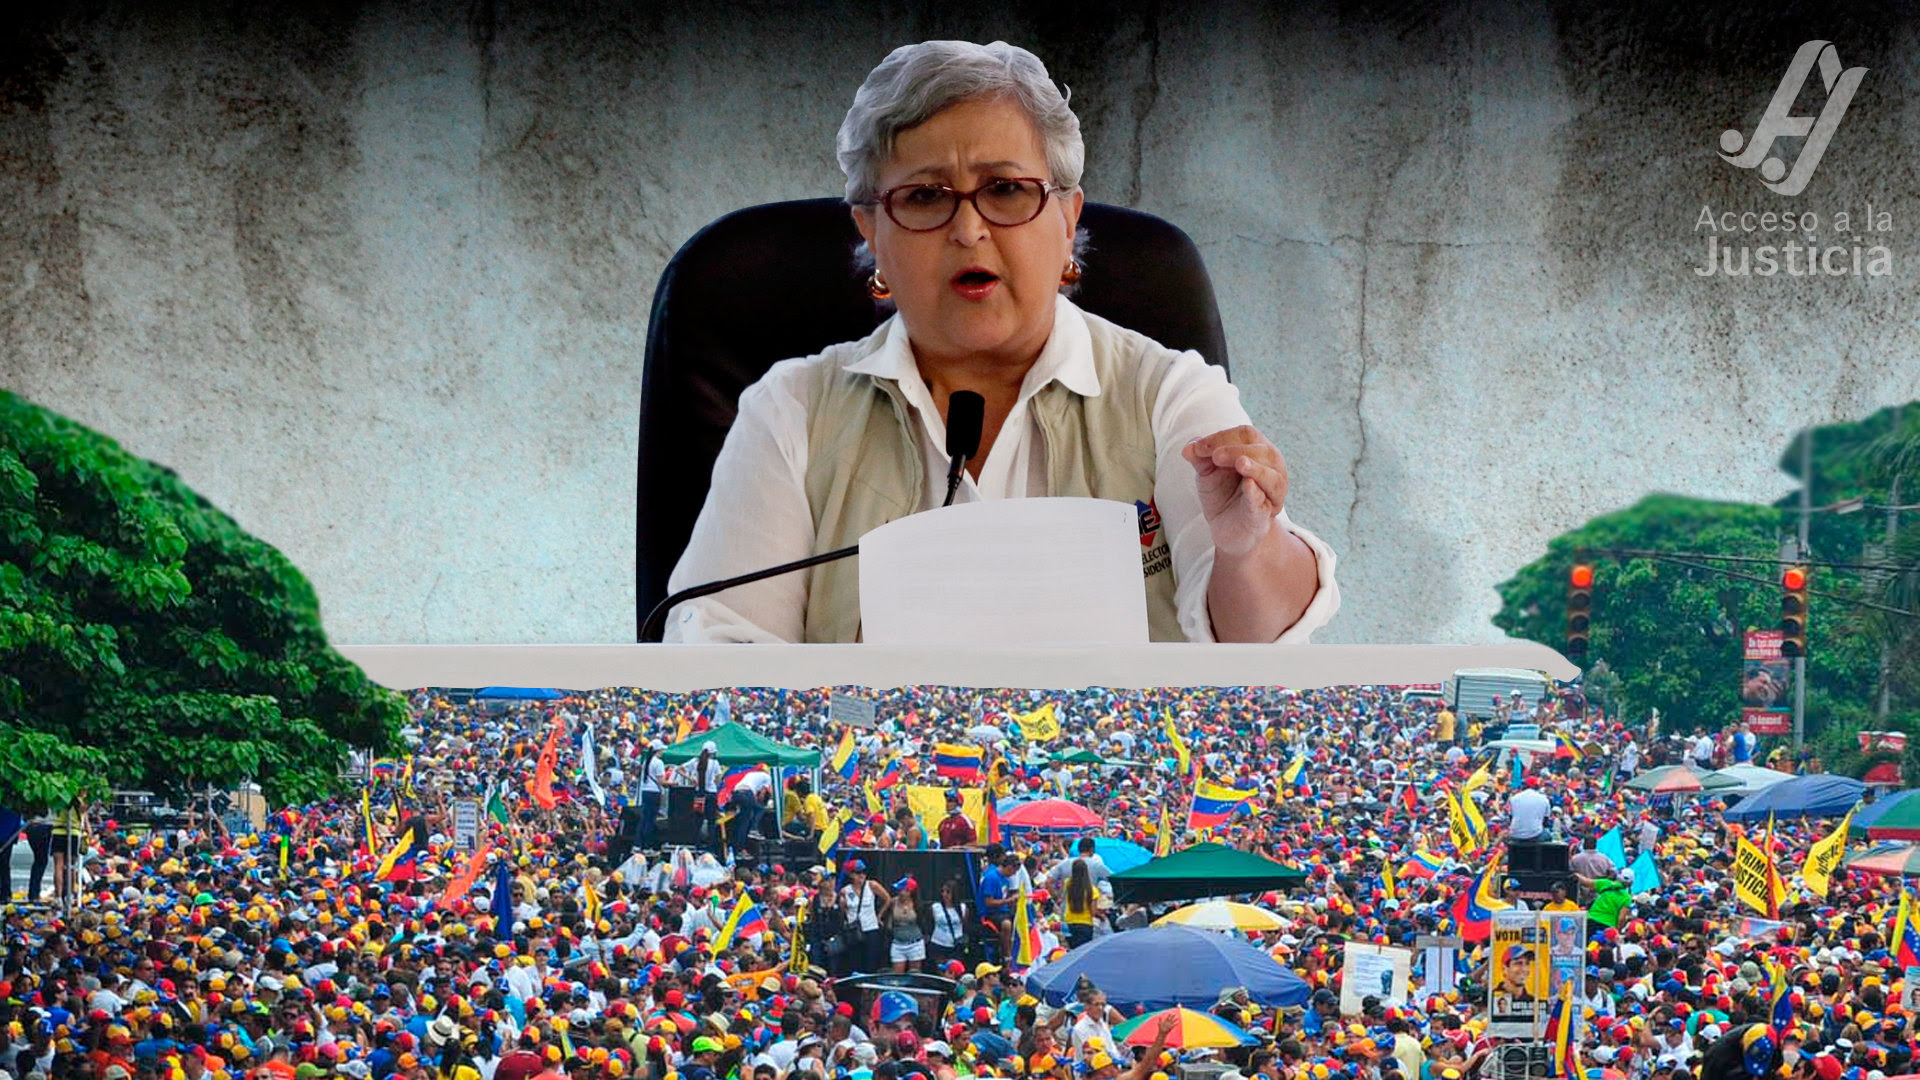 Acceso a la Justicia: El CNE no da tregua a los venezolanos